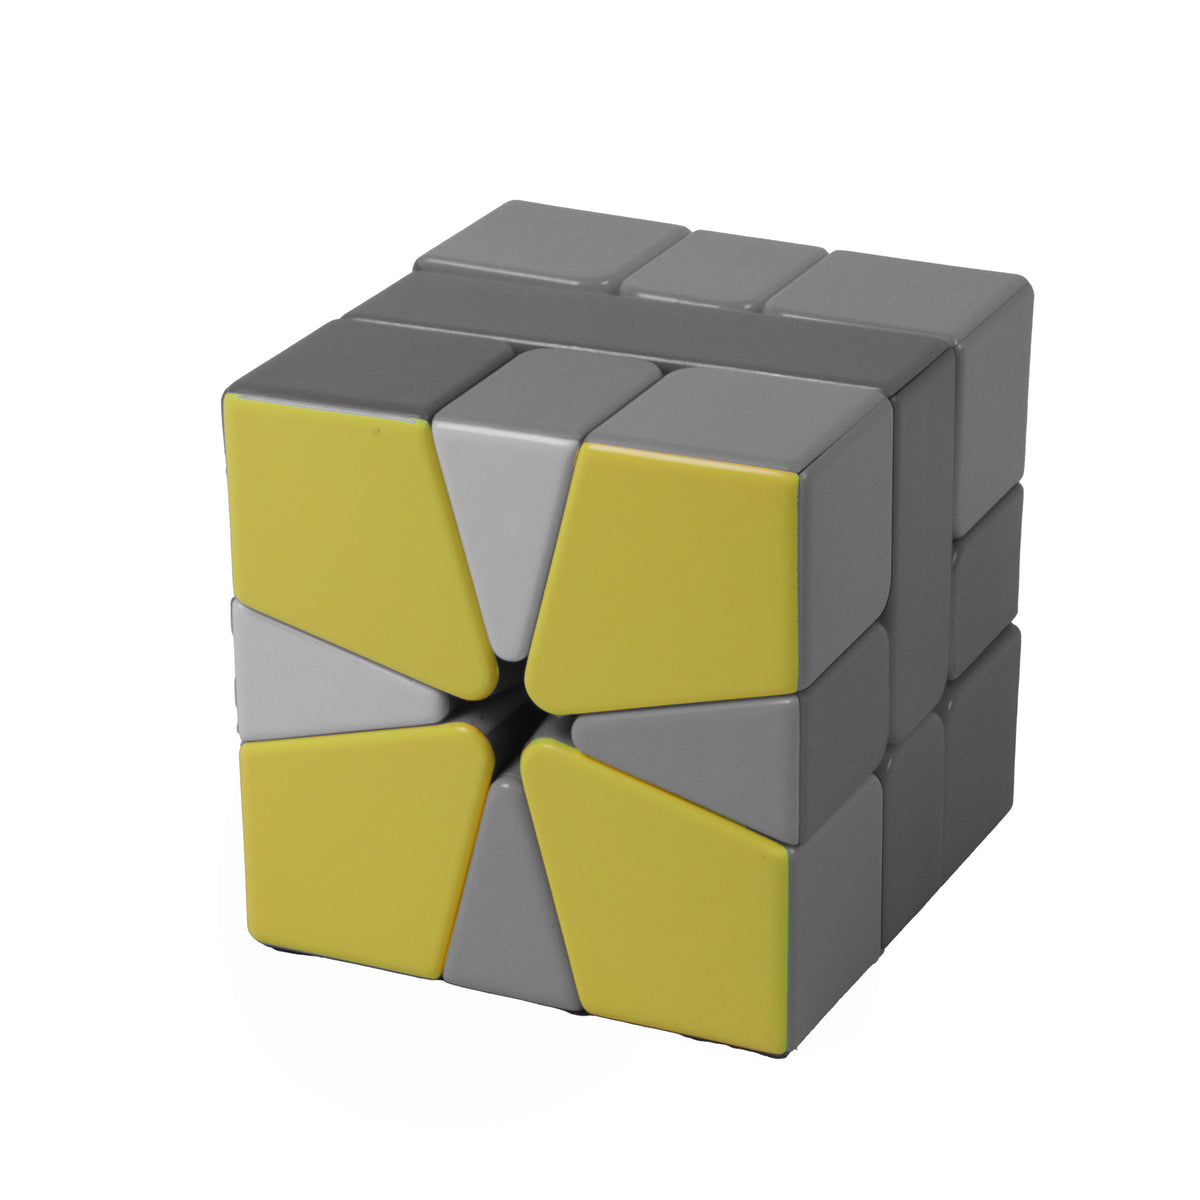 Step 2 - Solving the Square-1 speedcube